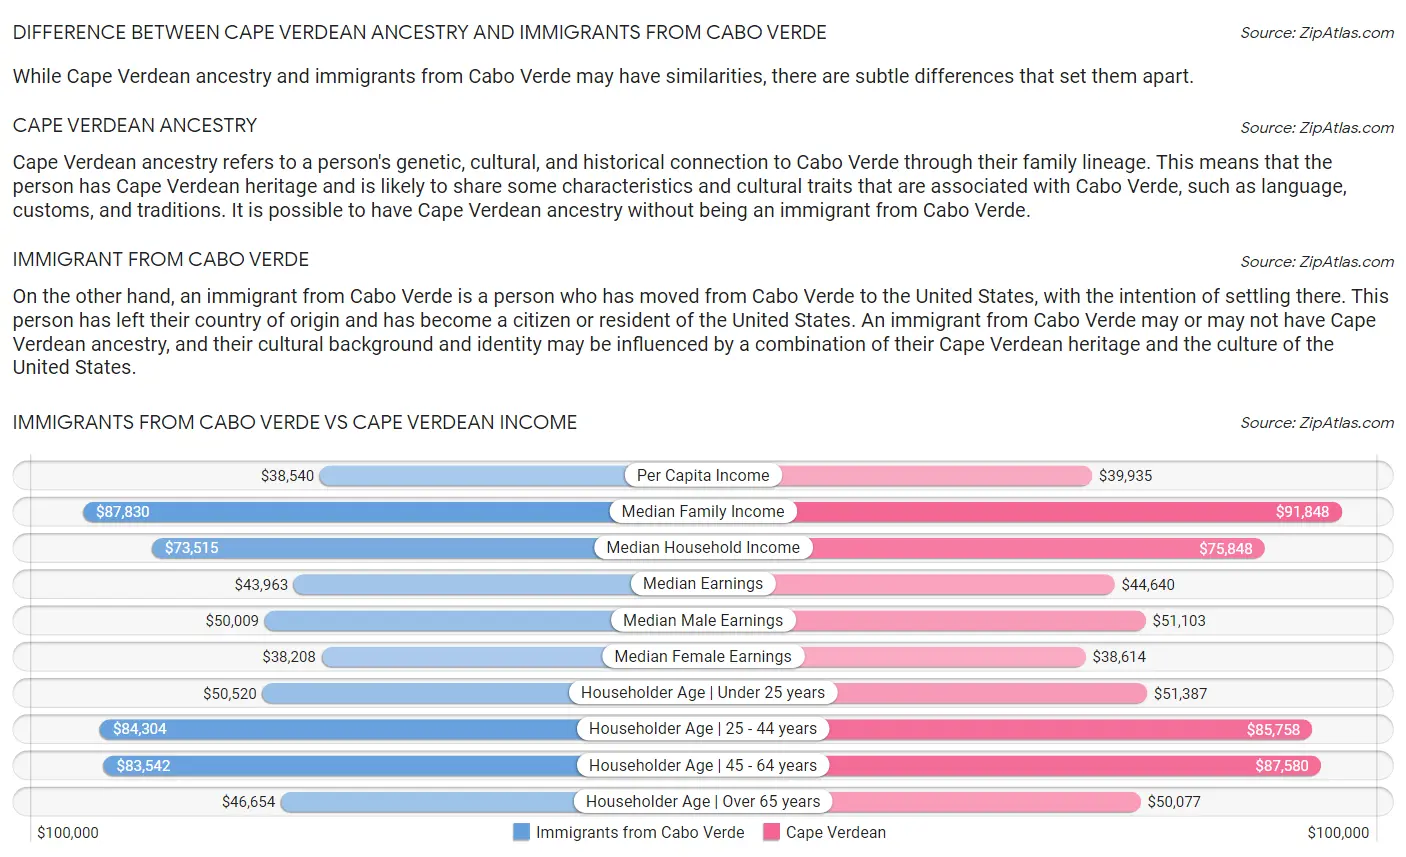 Immigrants from Cabo Verde vs Cape Verdean Income